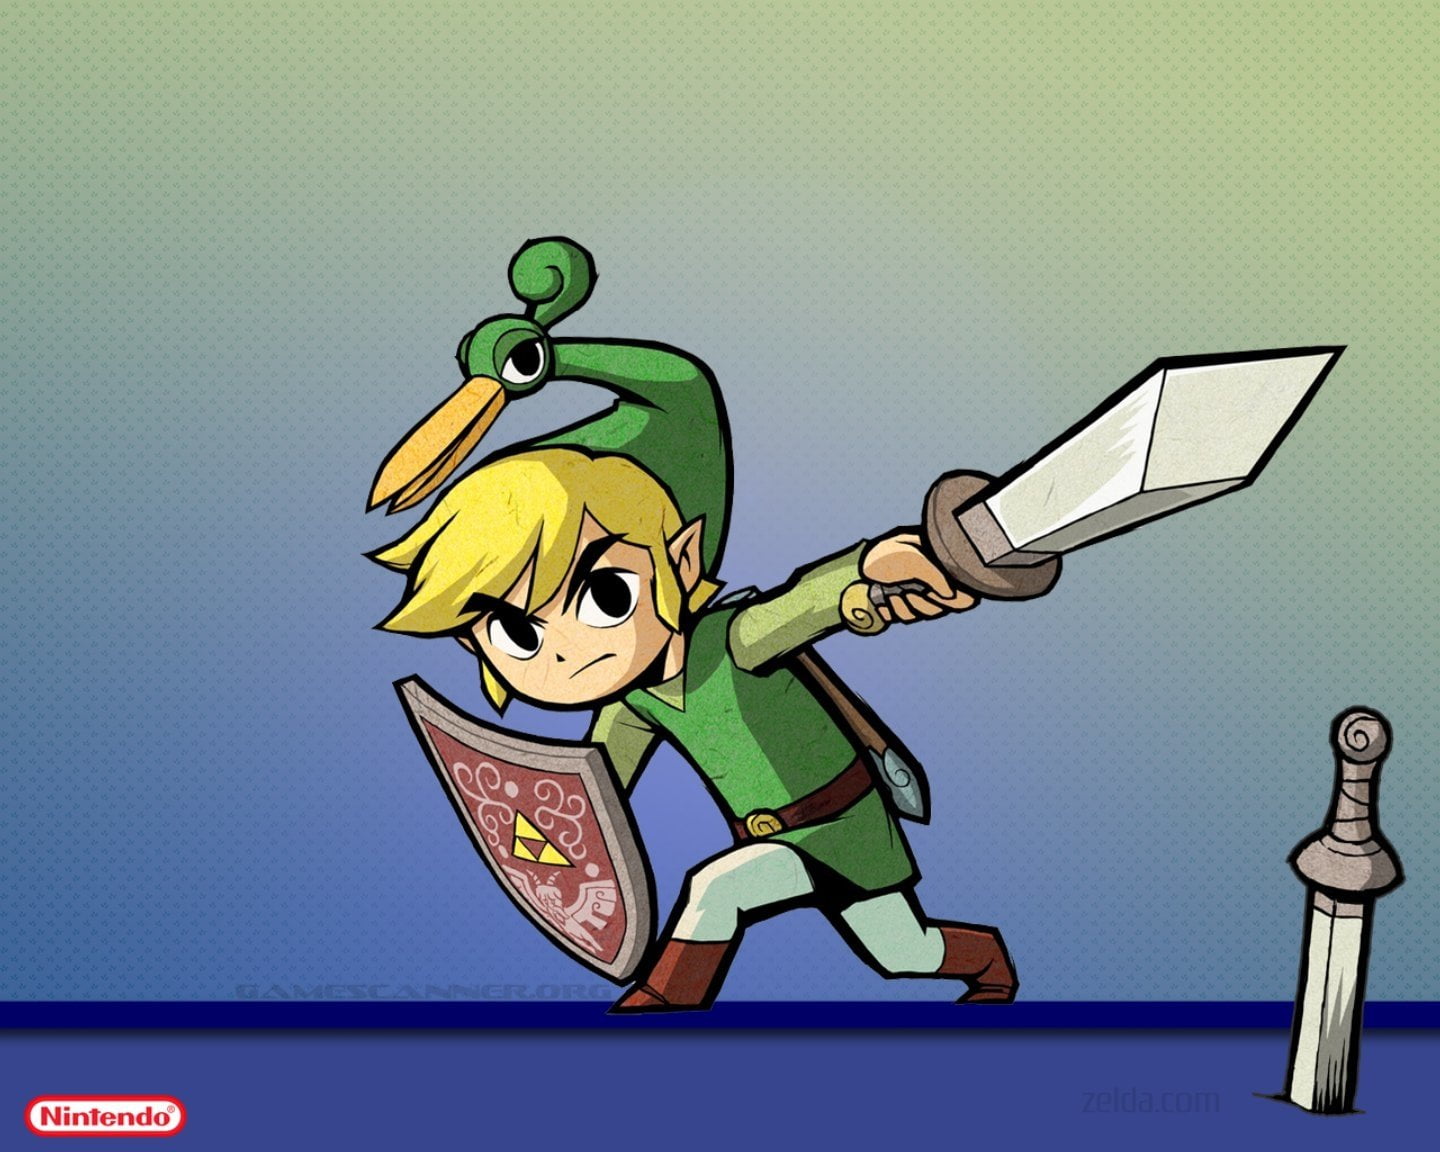 Nintendo The Legend of Zelda illustration, The Legend Of Zelda: The Minish Cap